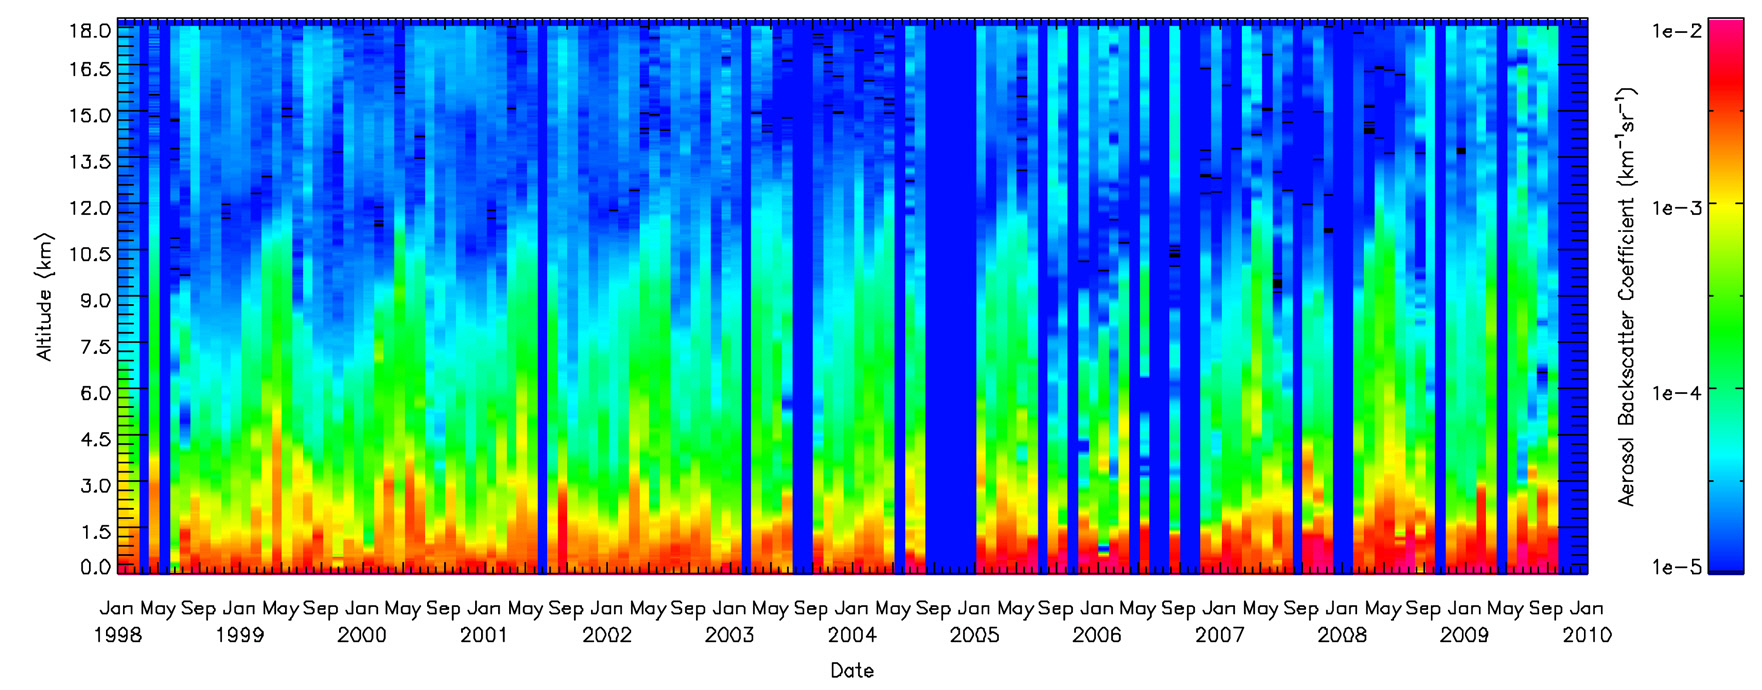 Temporal variation of LIDAR measured tropospheric aerosol backscatter profile at 532 nm wavelength from January 1998 to September 2009.